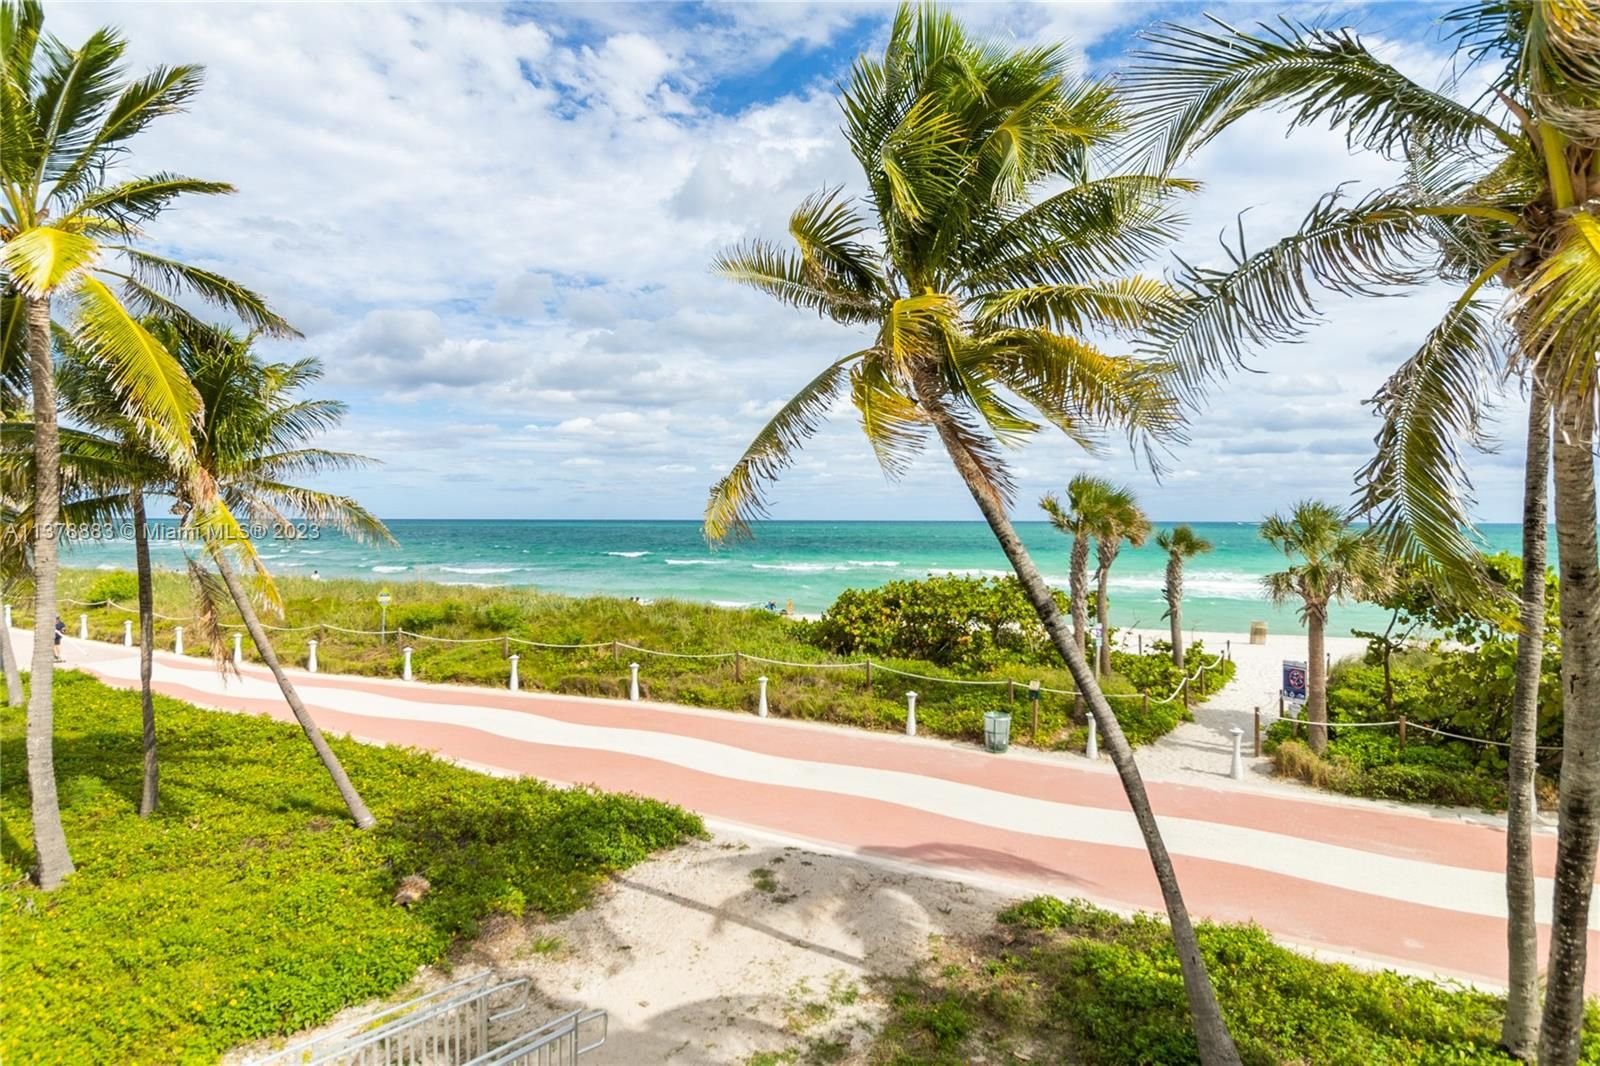 Real estate property located at 5401 Collins Ave #320, Miami-Dade County, Miami Beach, FL